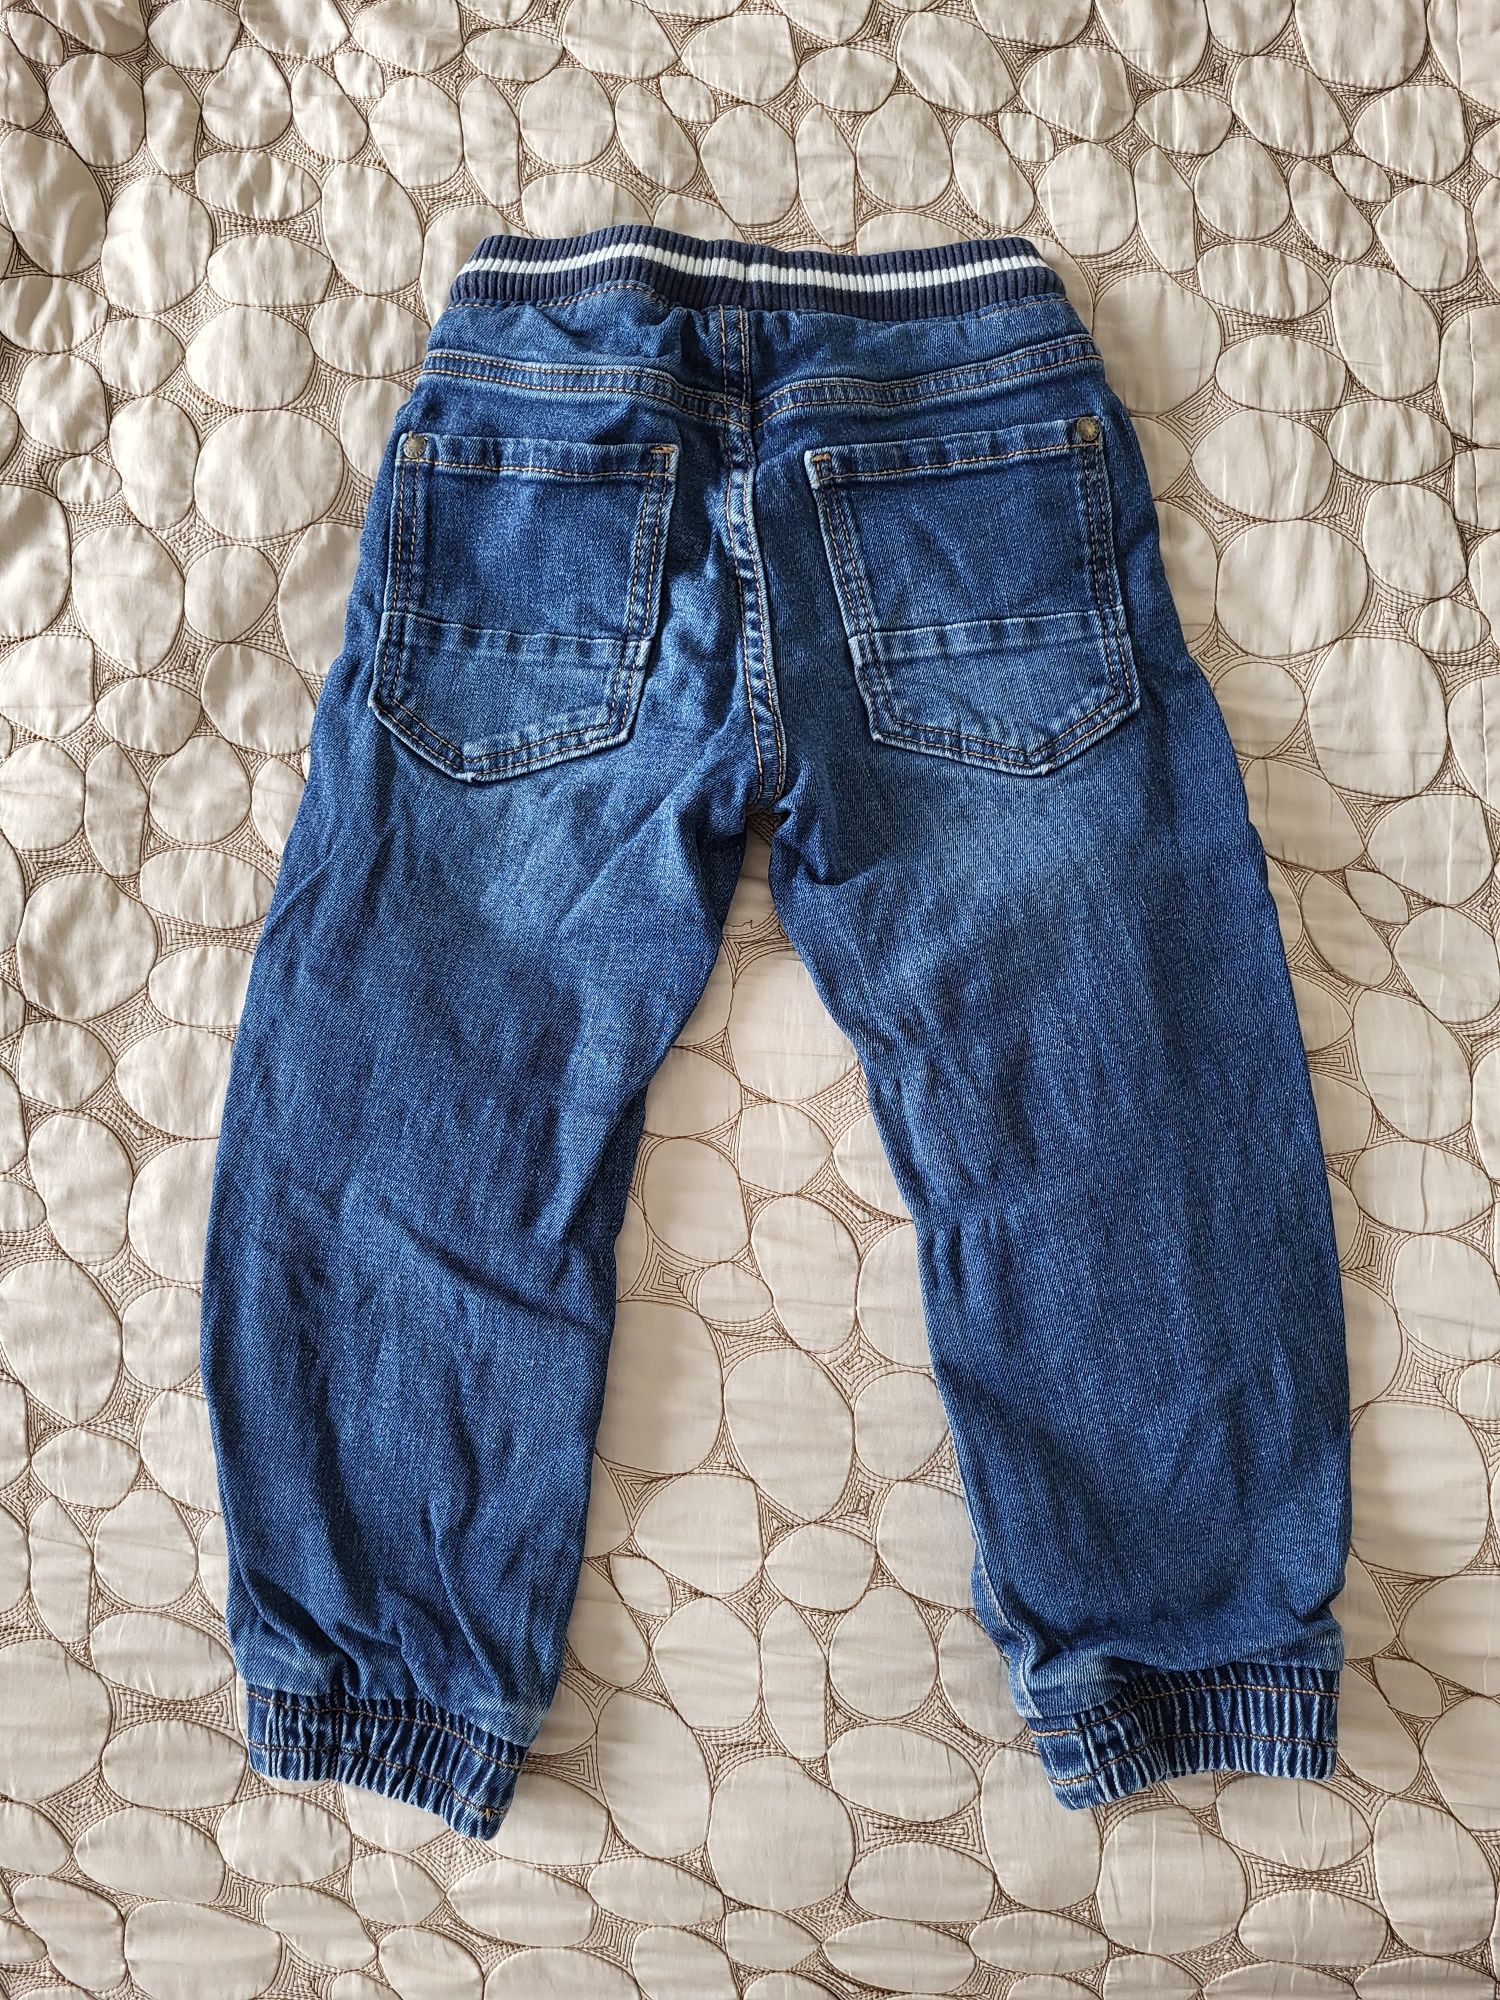 jeansy Kappahl 104cm na podszewce